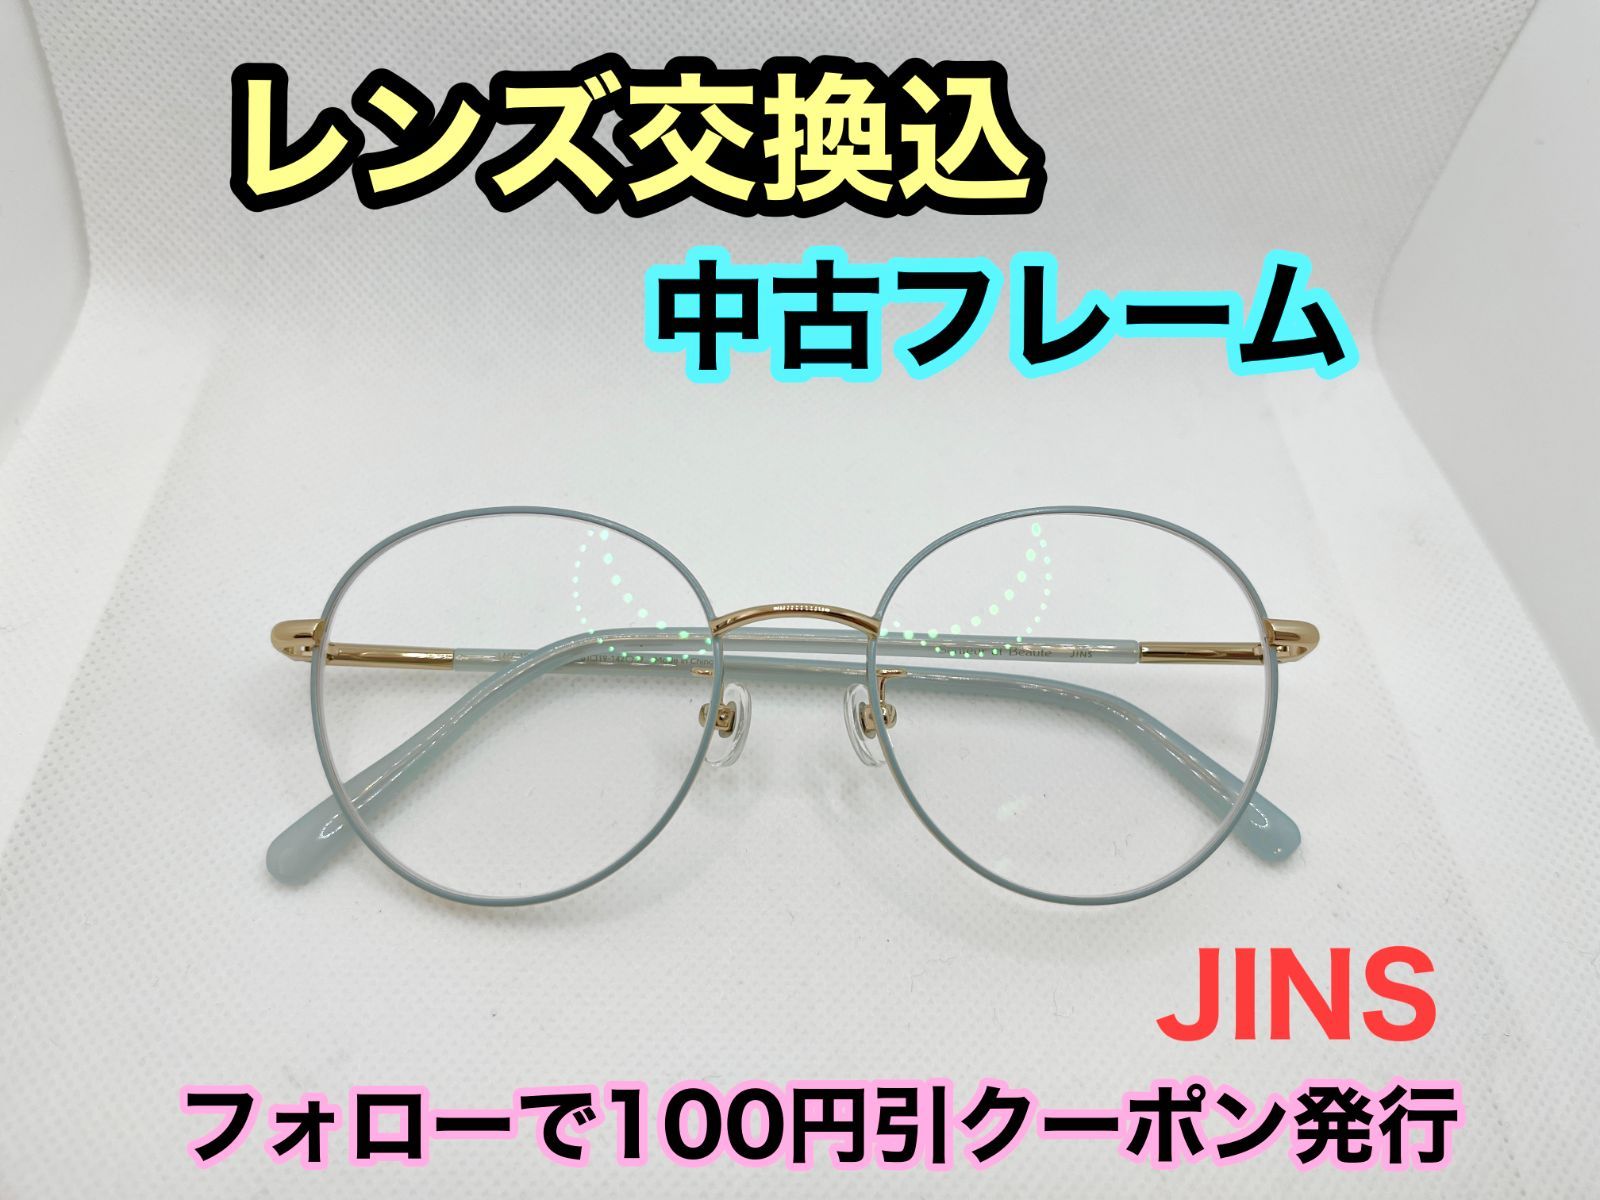 JINS 伊達メガネ - メガネ・老眼鏡